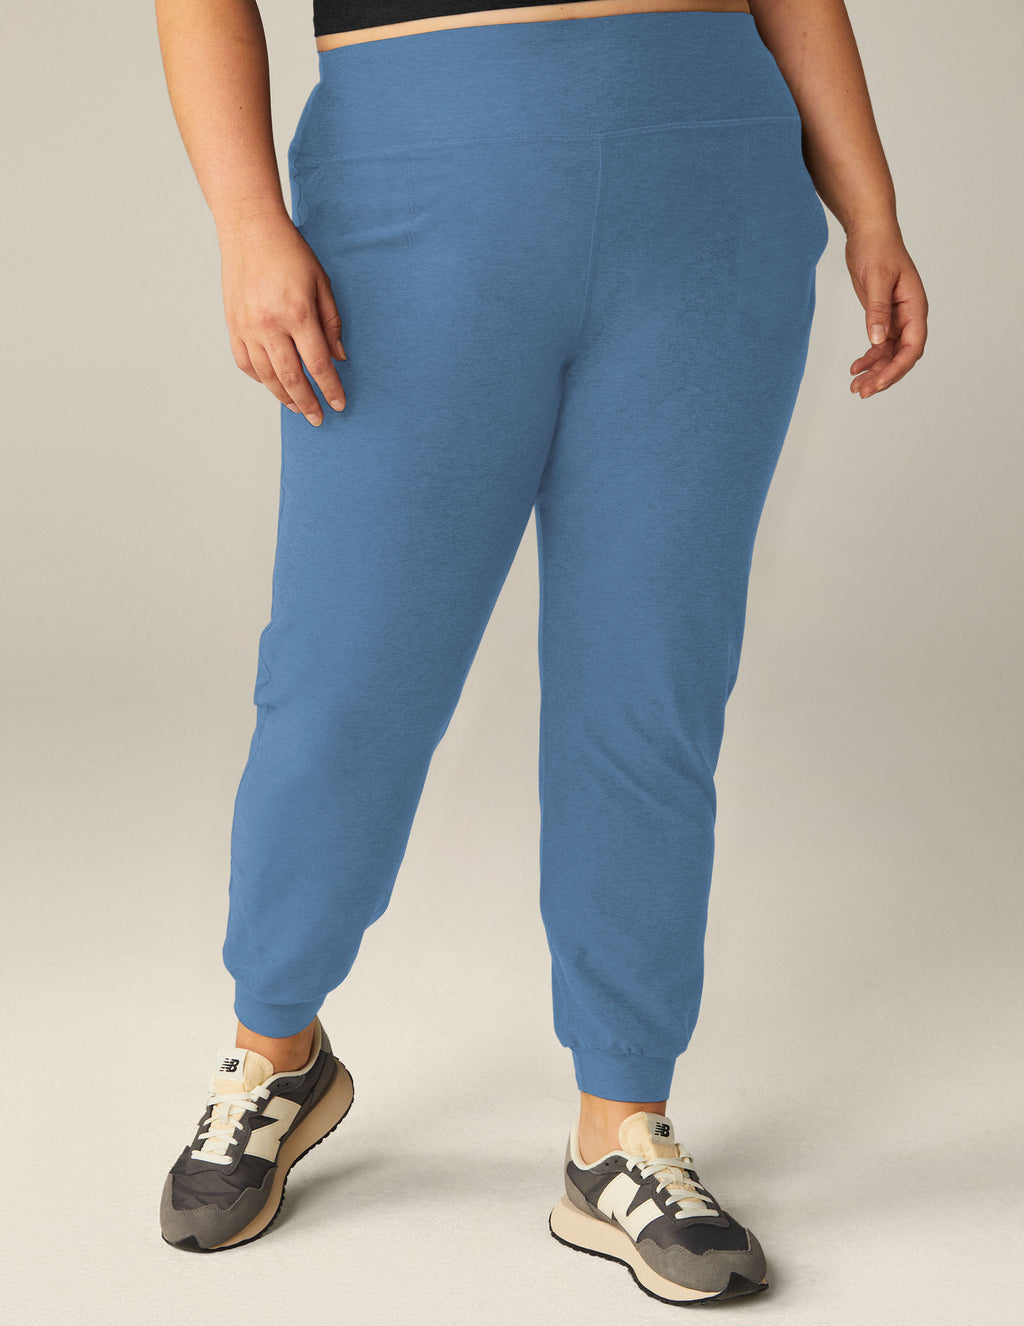 Blair Womens Blue Sweatpants Size Small - beyond exchange